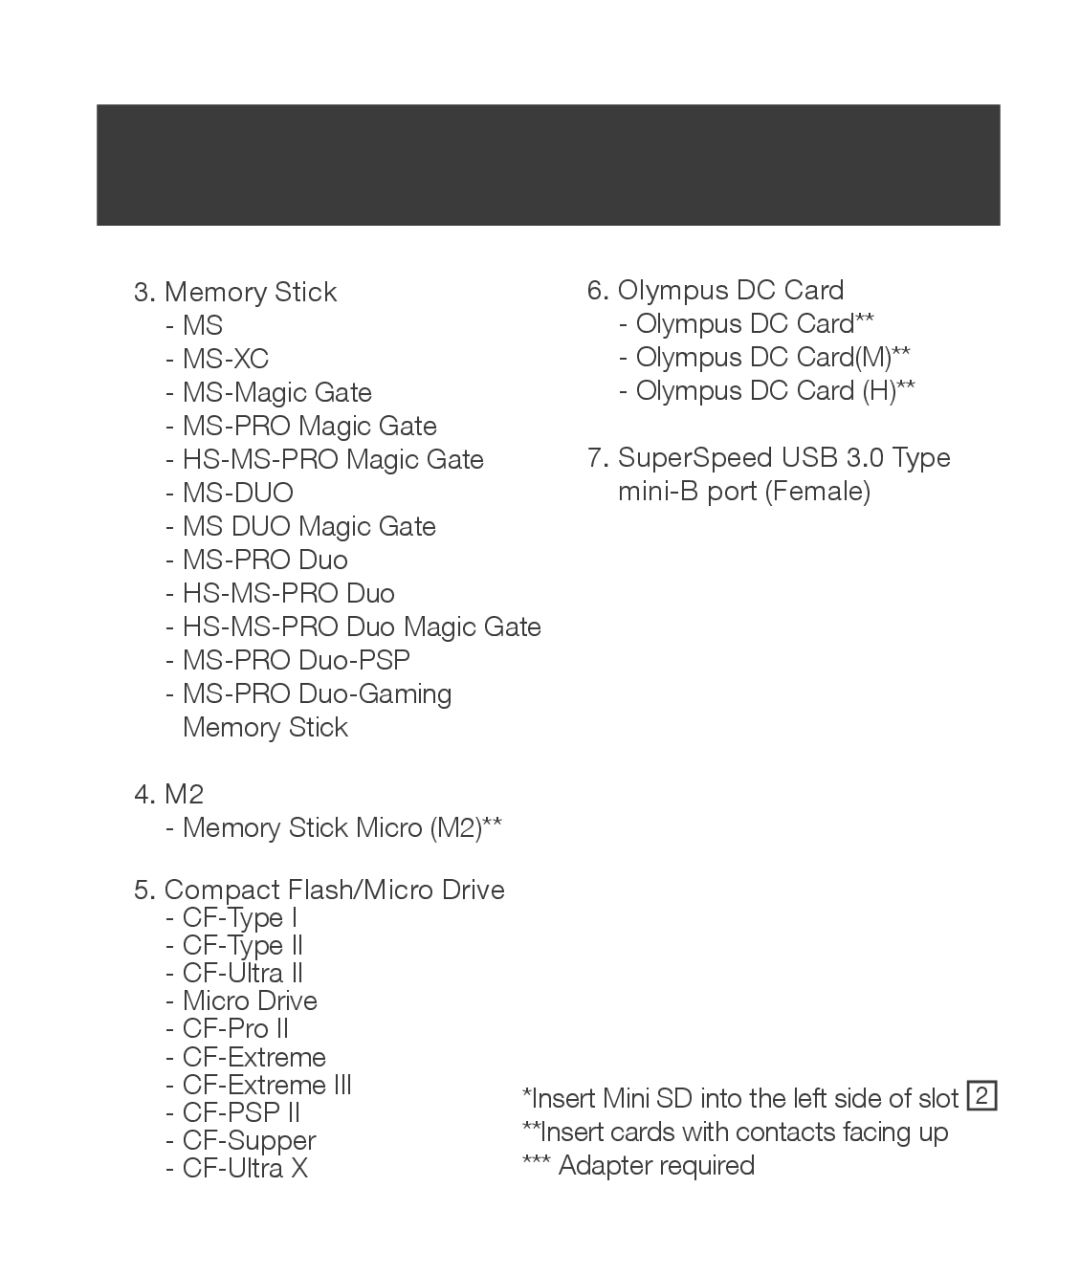 IOGear Q1338 Memory Stick, Ms-Xc, Olympus DC CardM, MS-Magic Gate, Olympus DC Card H, MS-PRO Magic Gate, Ms-Duo 